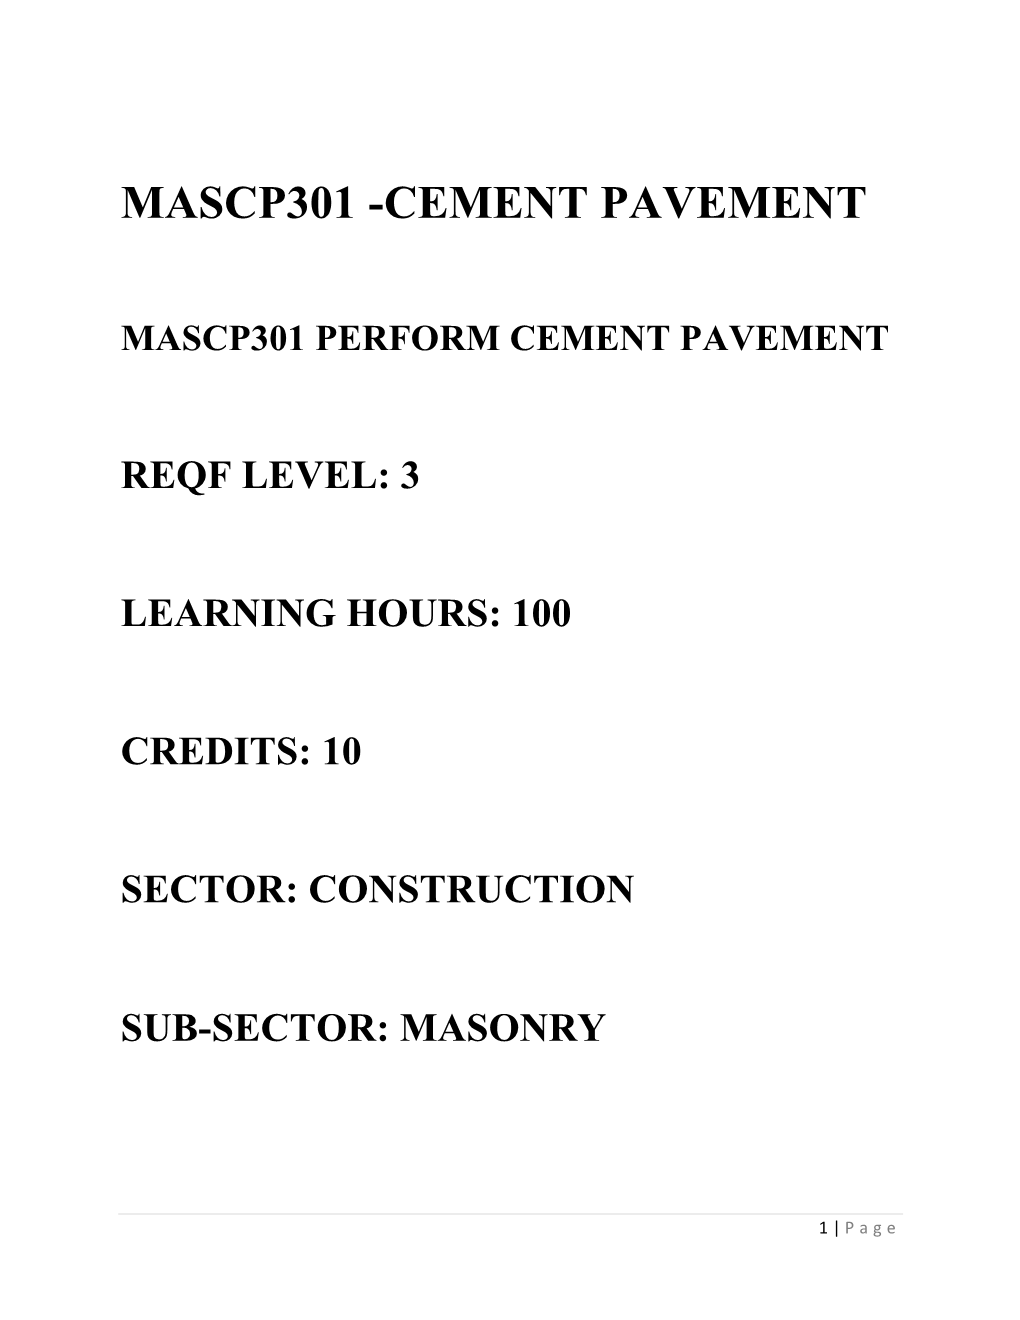 Mascp301 -Cement Pavement